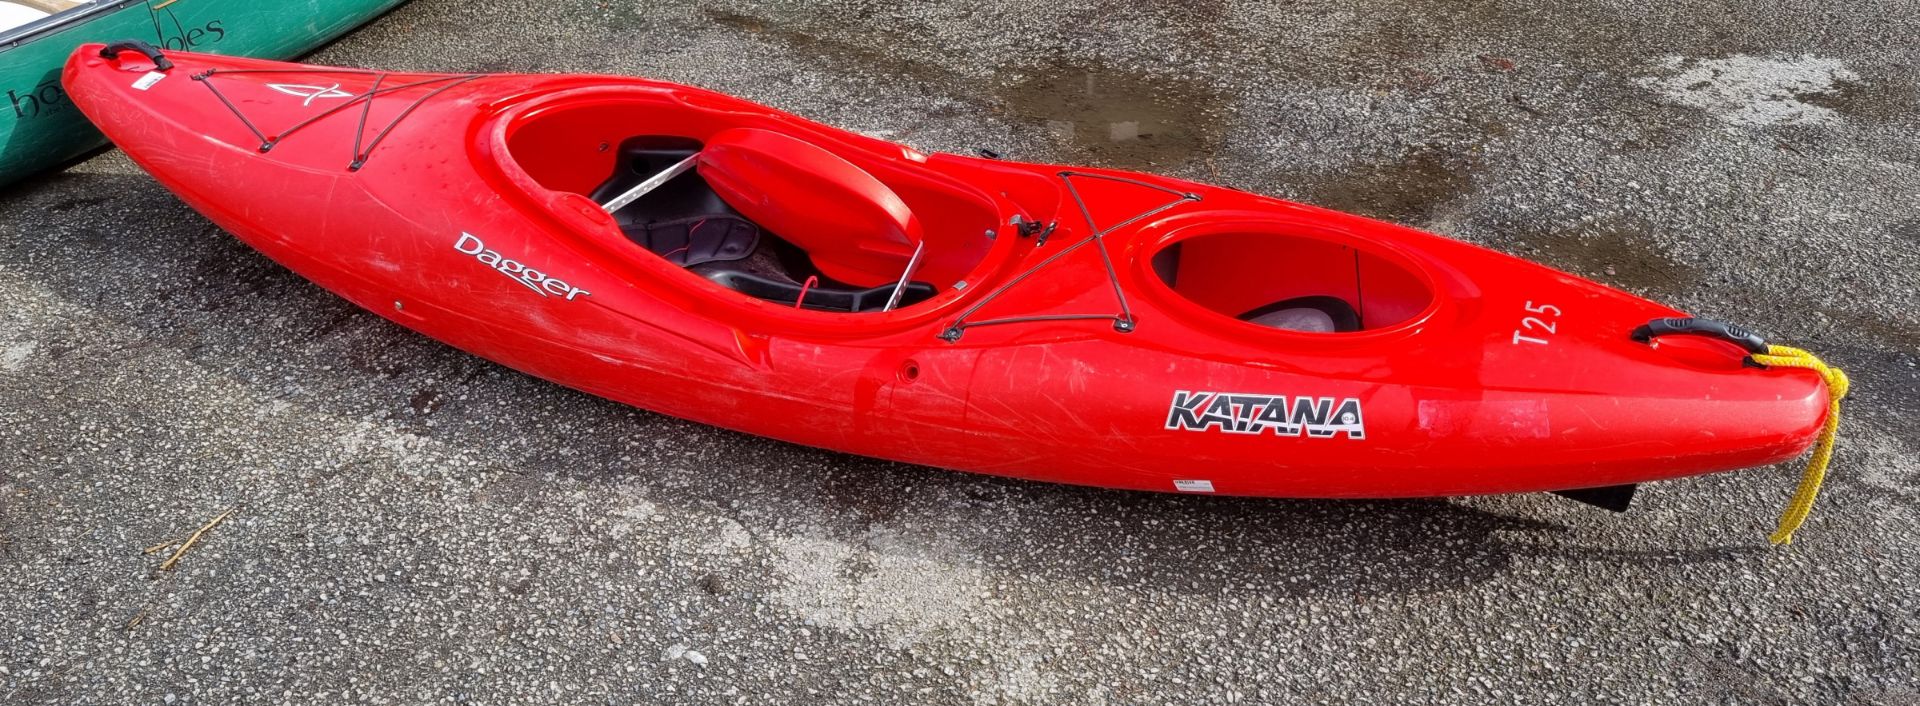 Dagger Katana polyethylene kayak - red - W 3200 x D 660 x H 420mm - Image 2 of 8